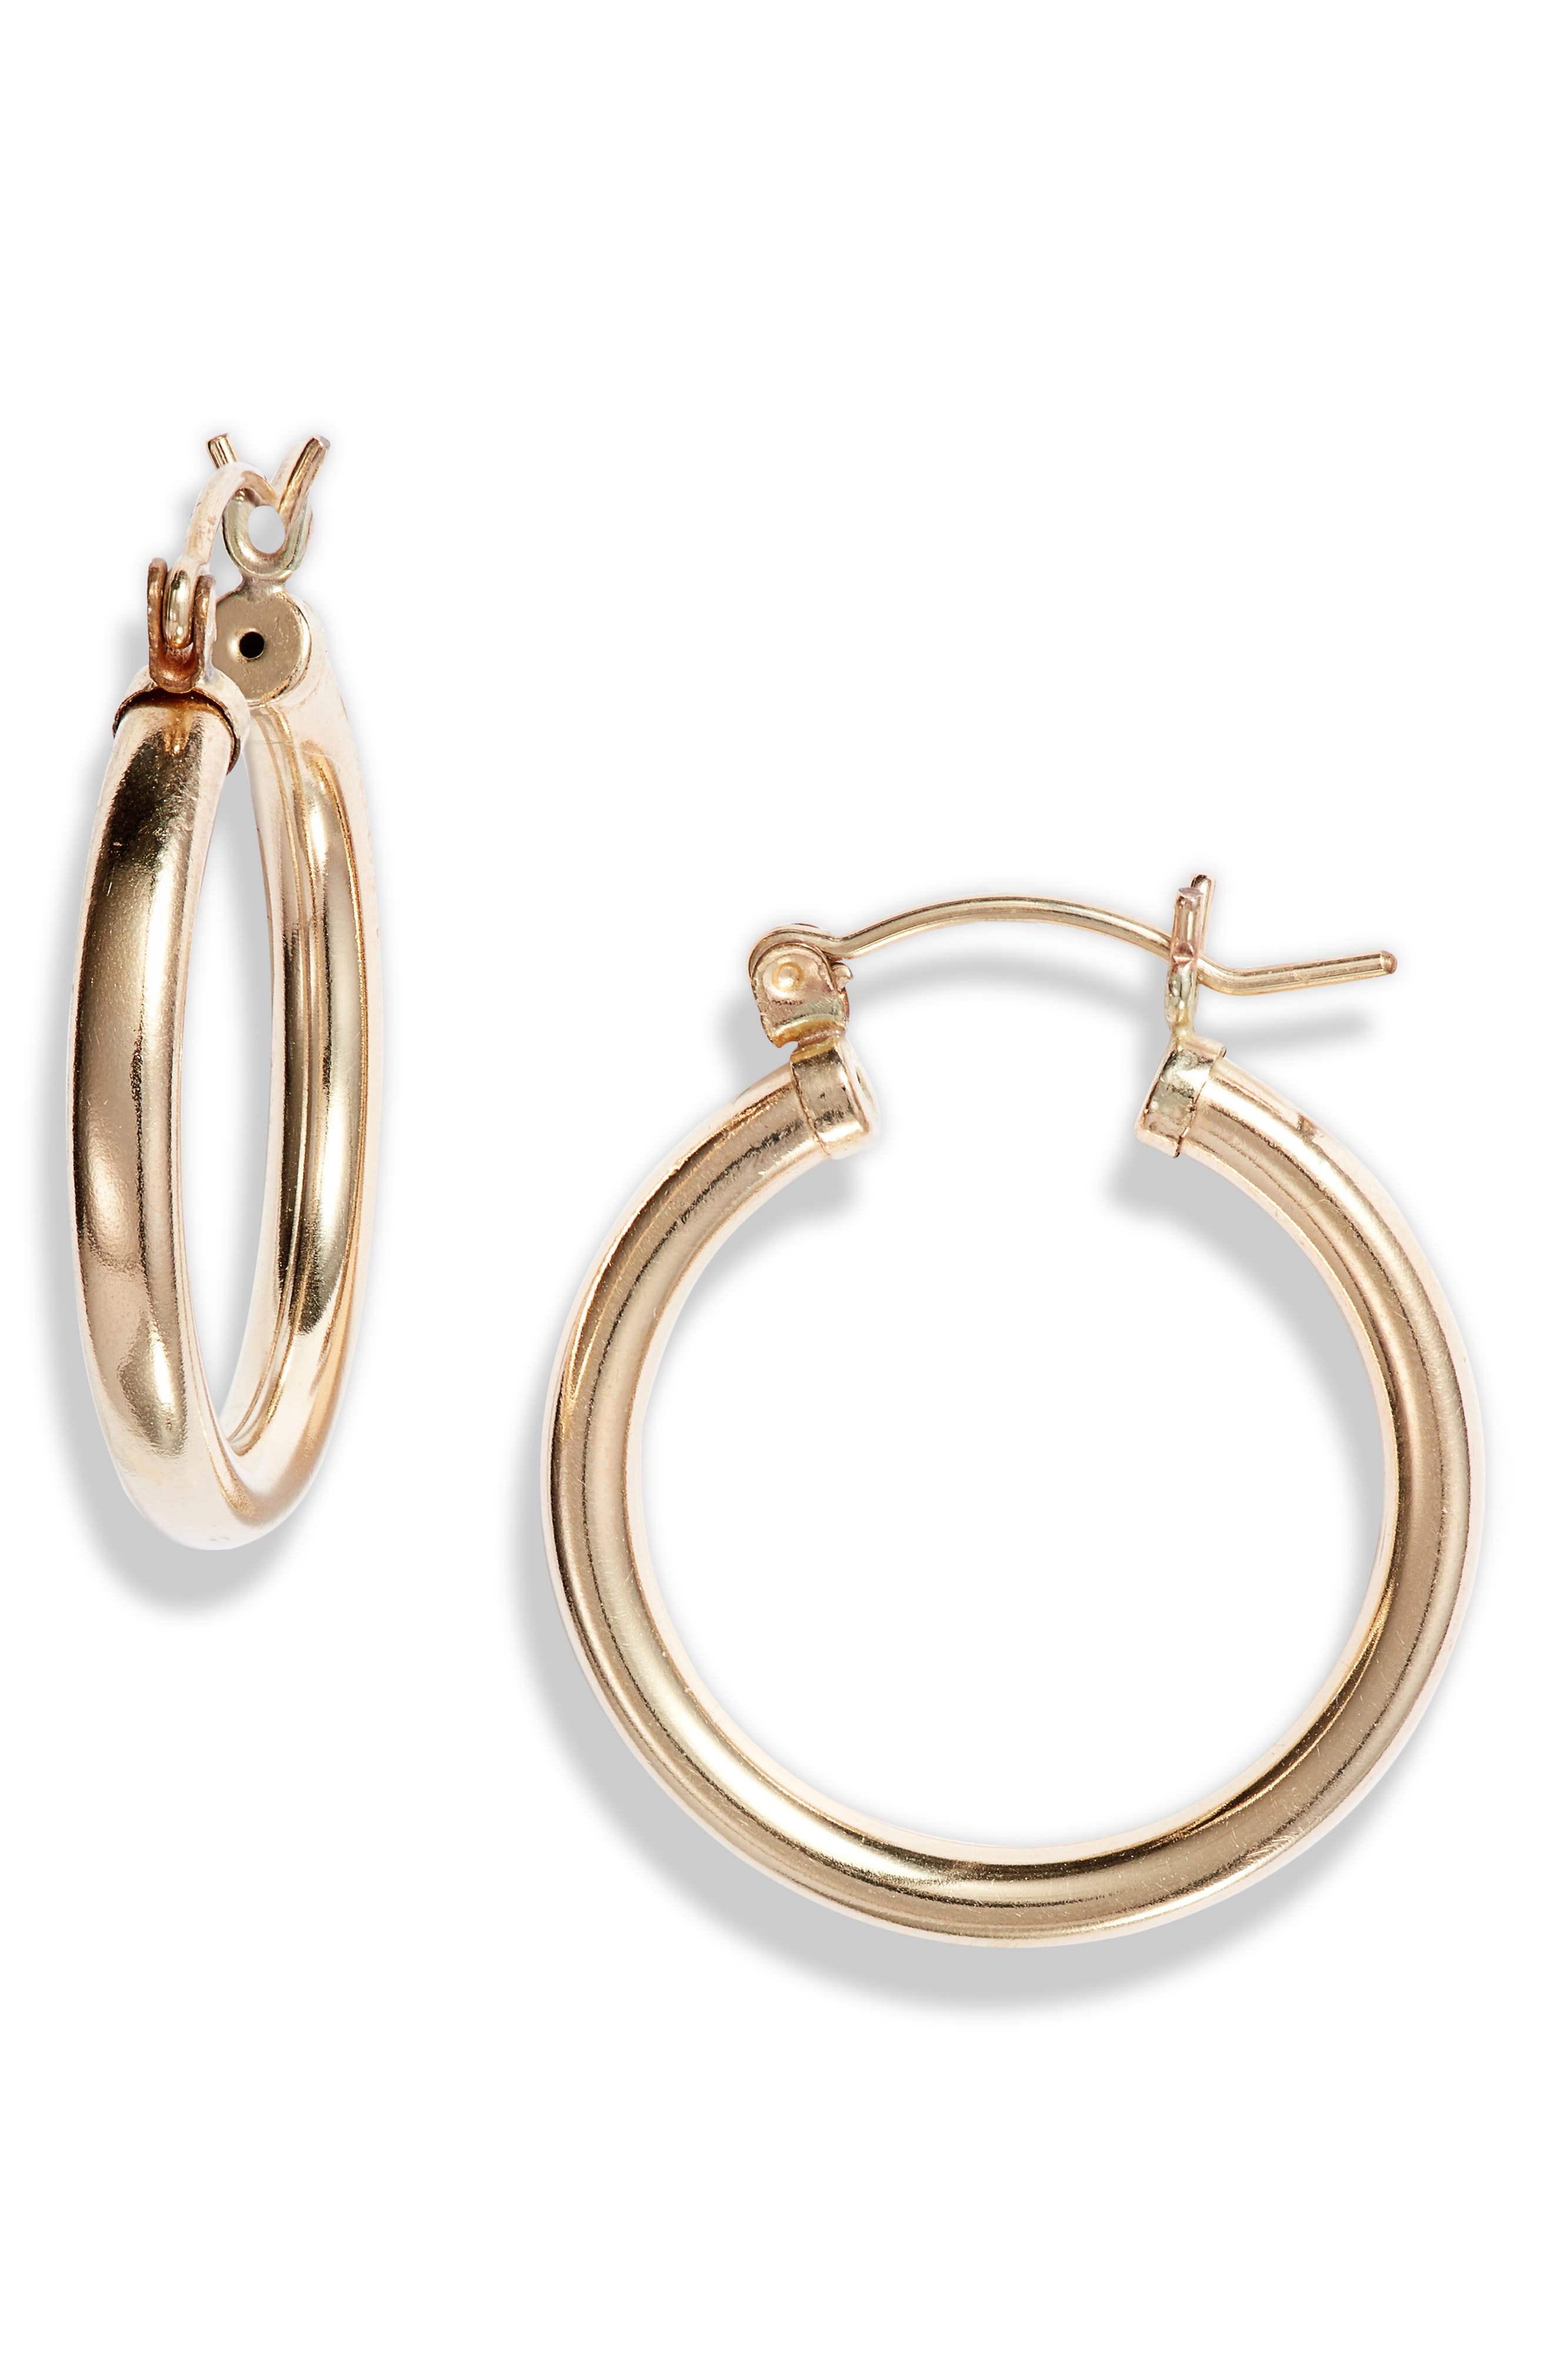 6mm x 28mm Jewel Tie 14k Gold Two-tone Braided Hoop Earrings